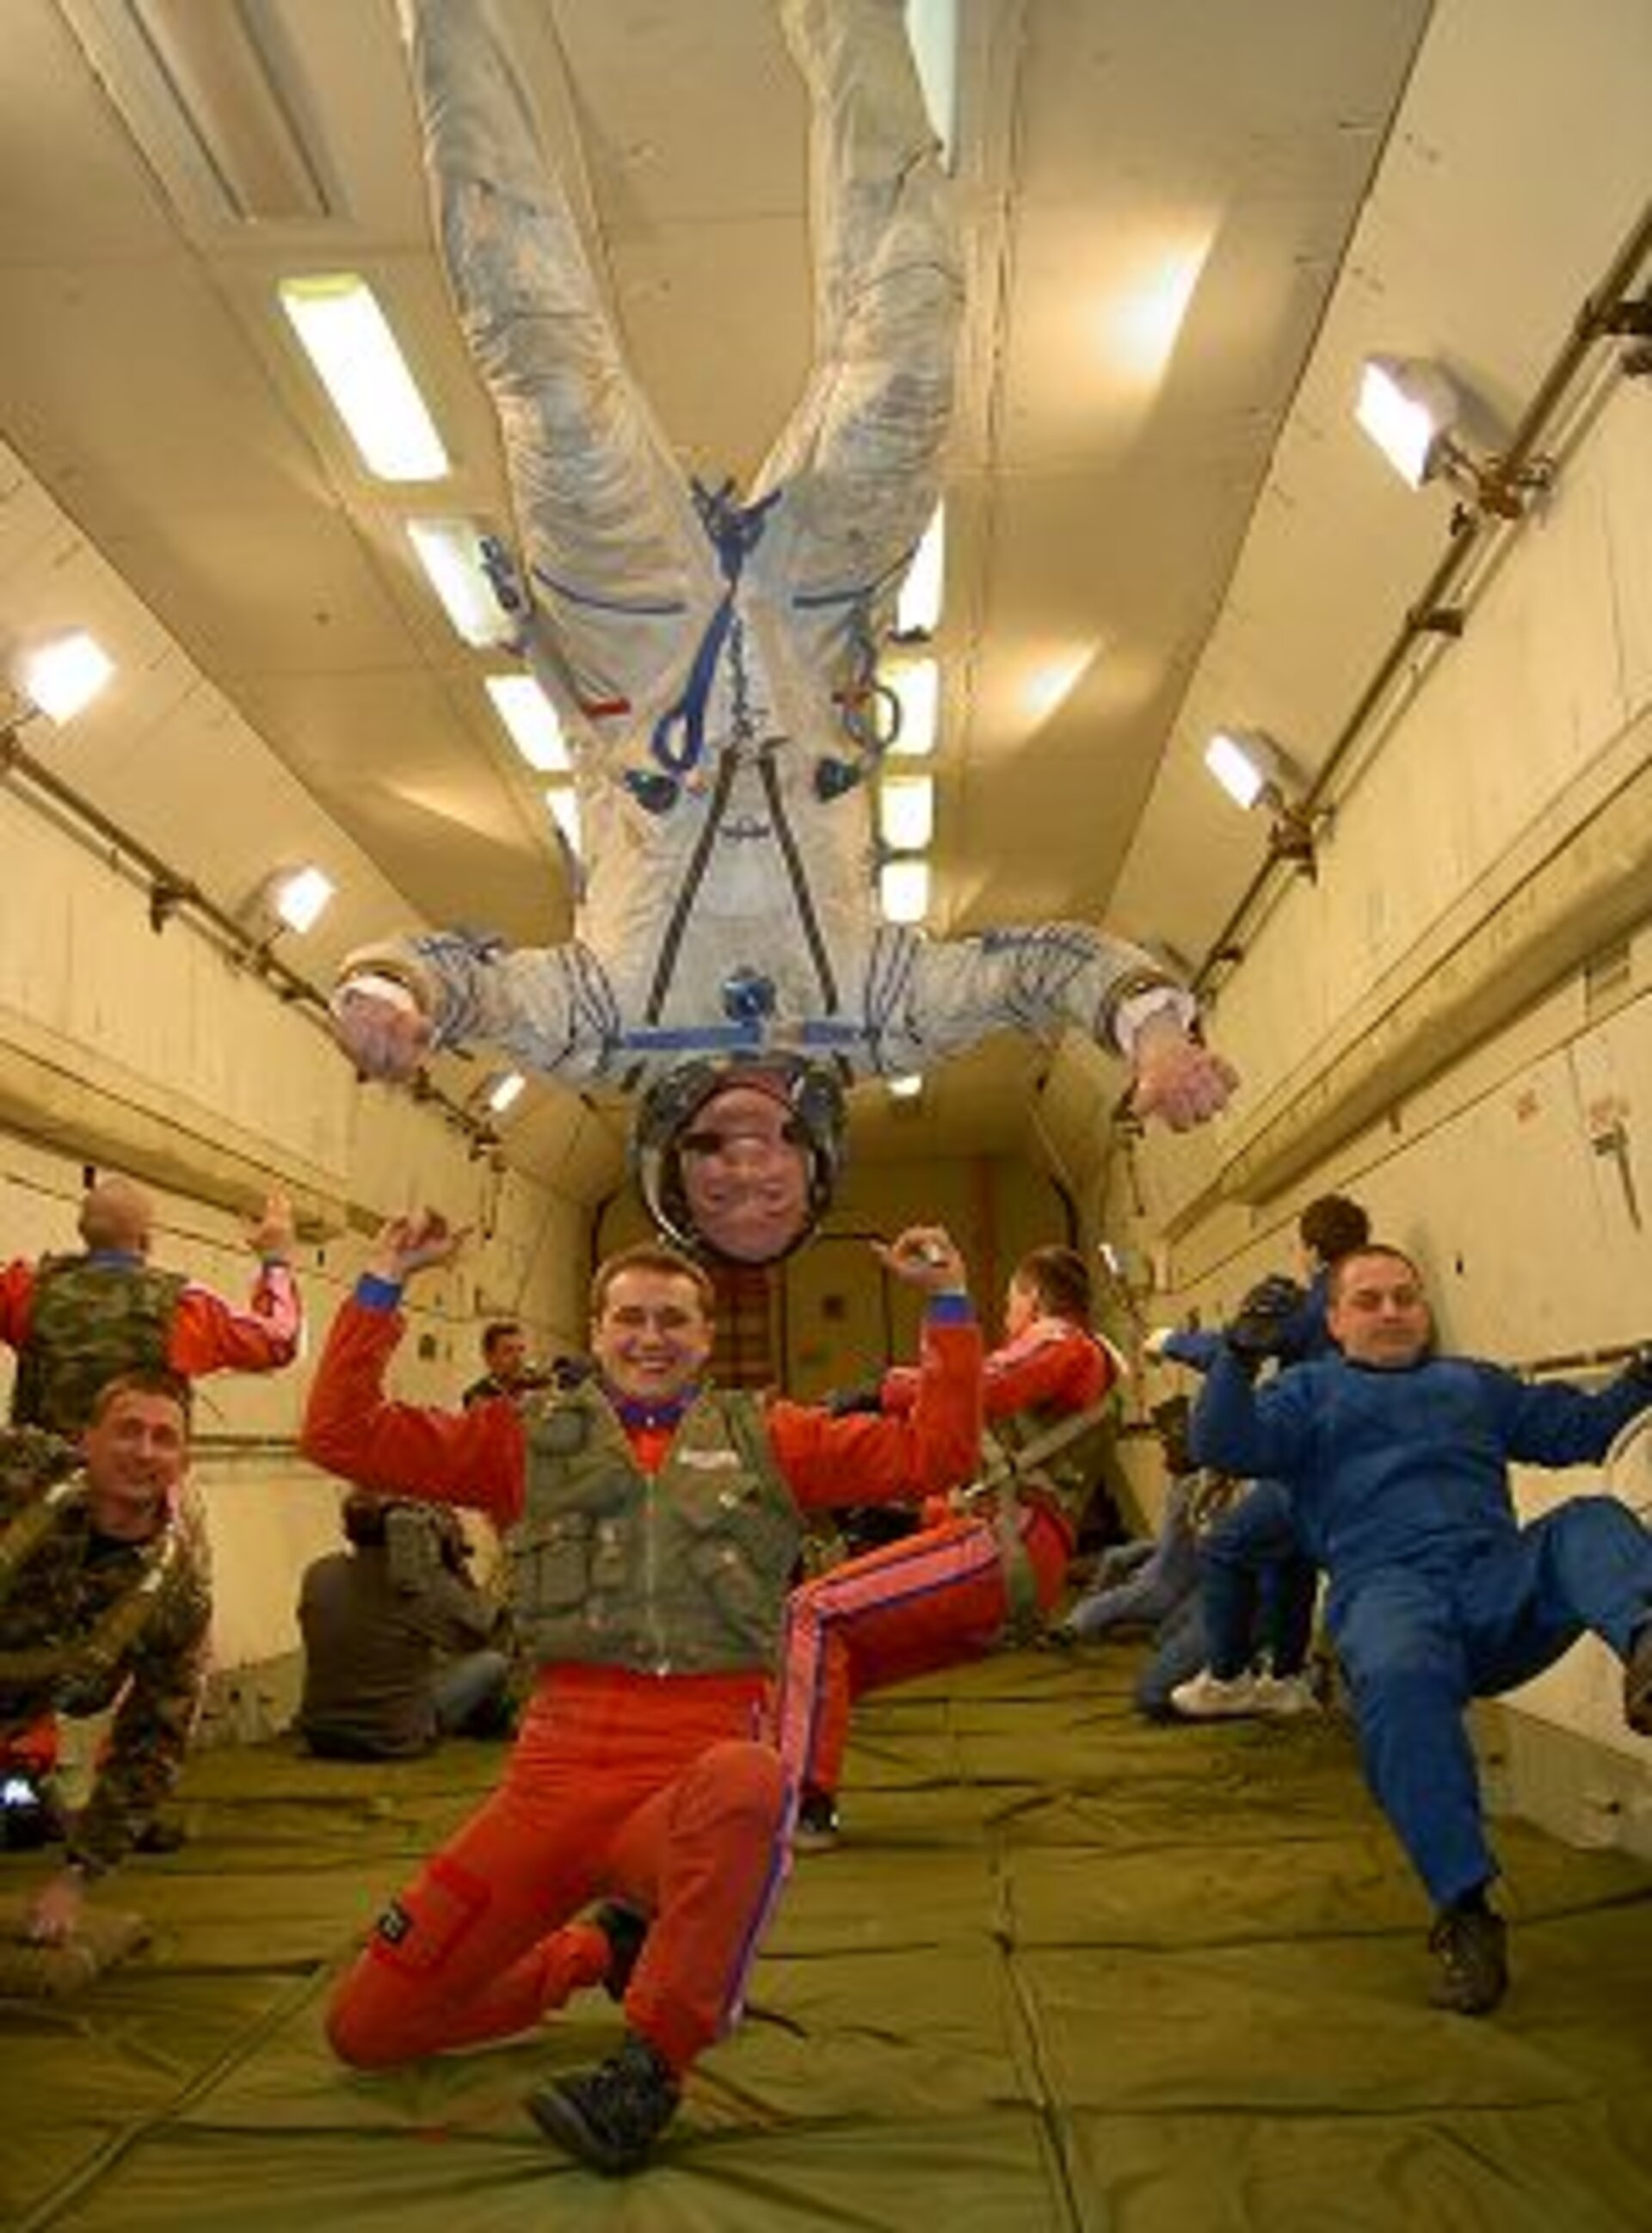 Weightlessness on board a Russian parabolic flight